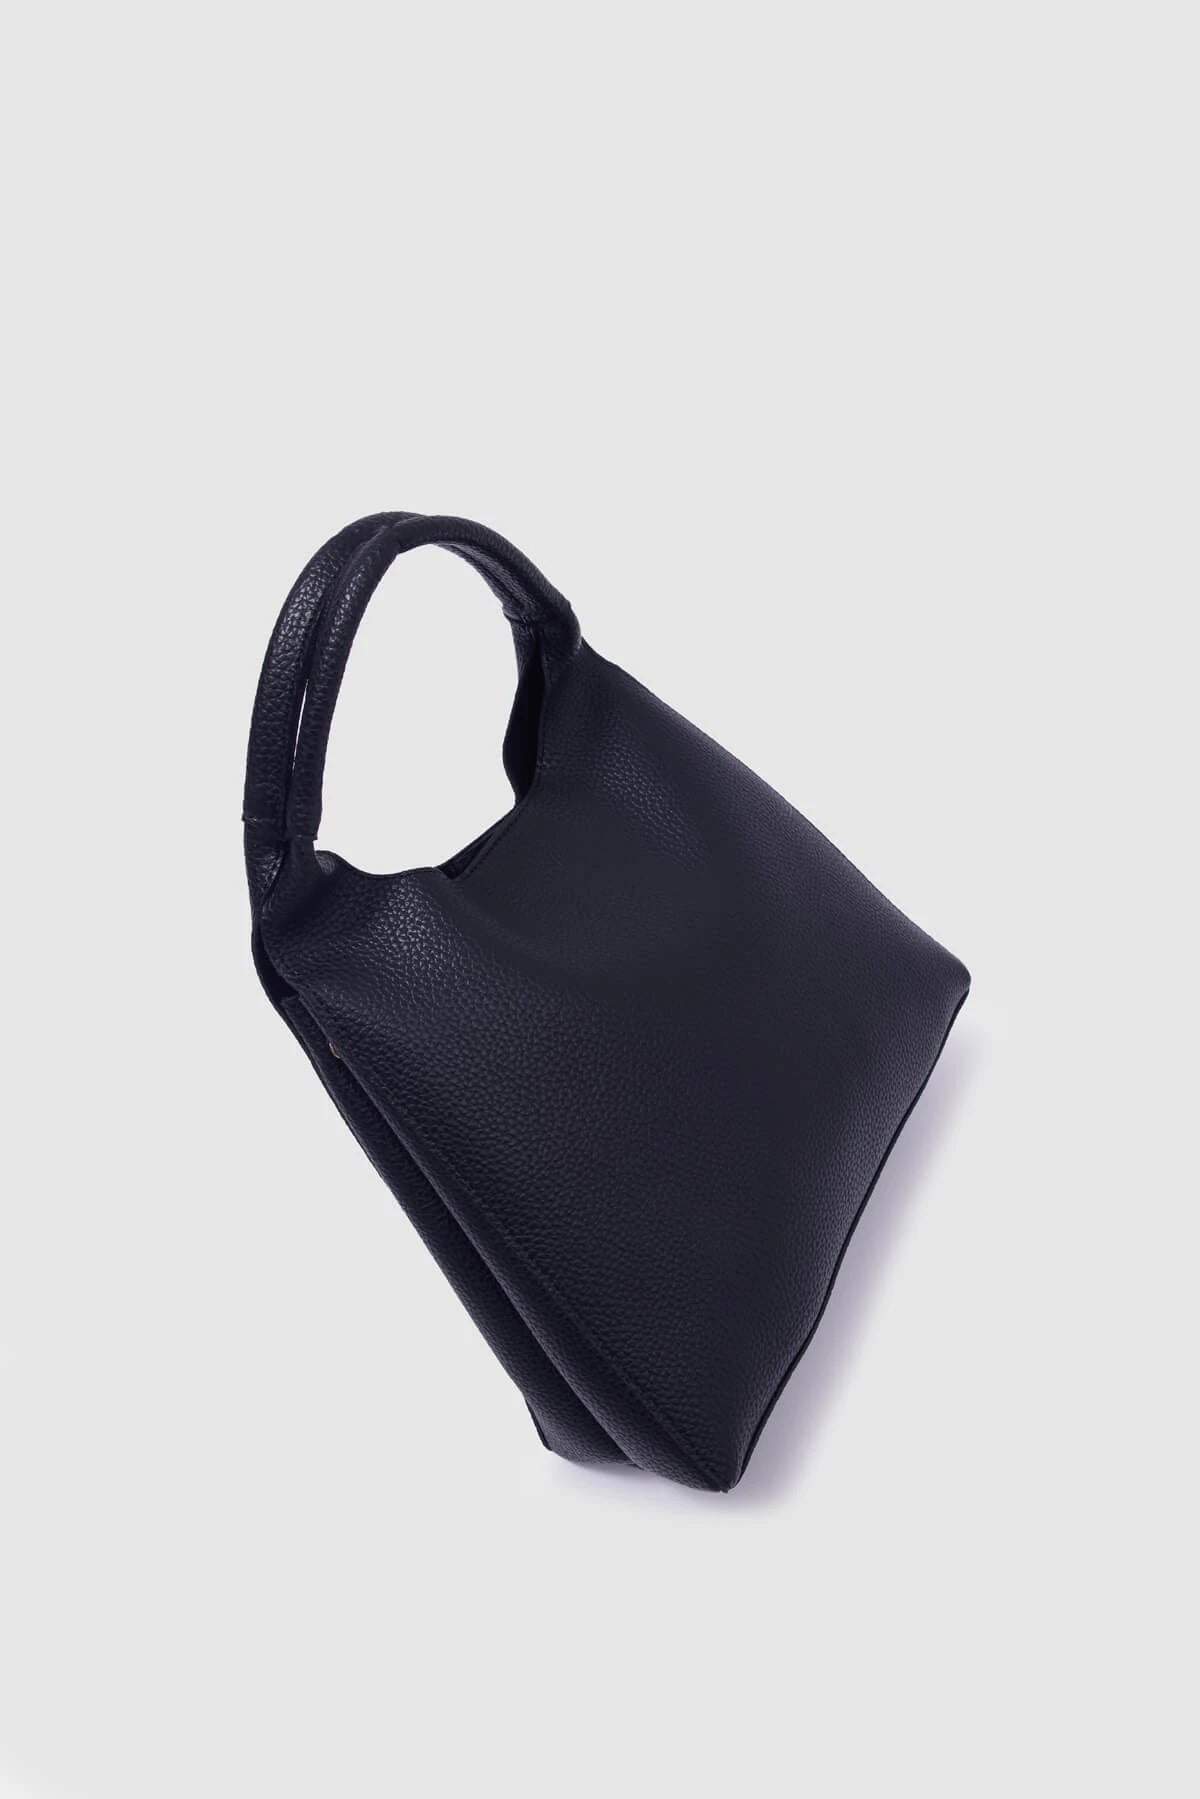 Leather Urban Tote Handbag tote bag LUNARITY GARAGE Black  